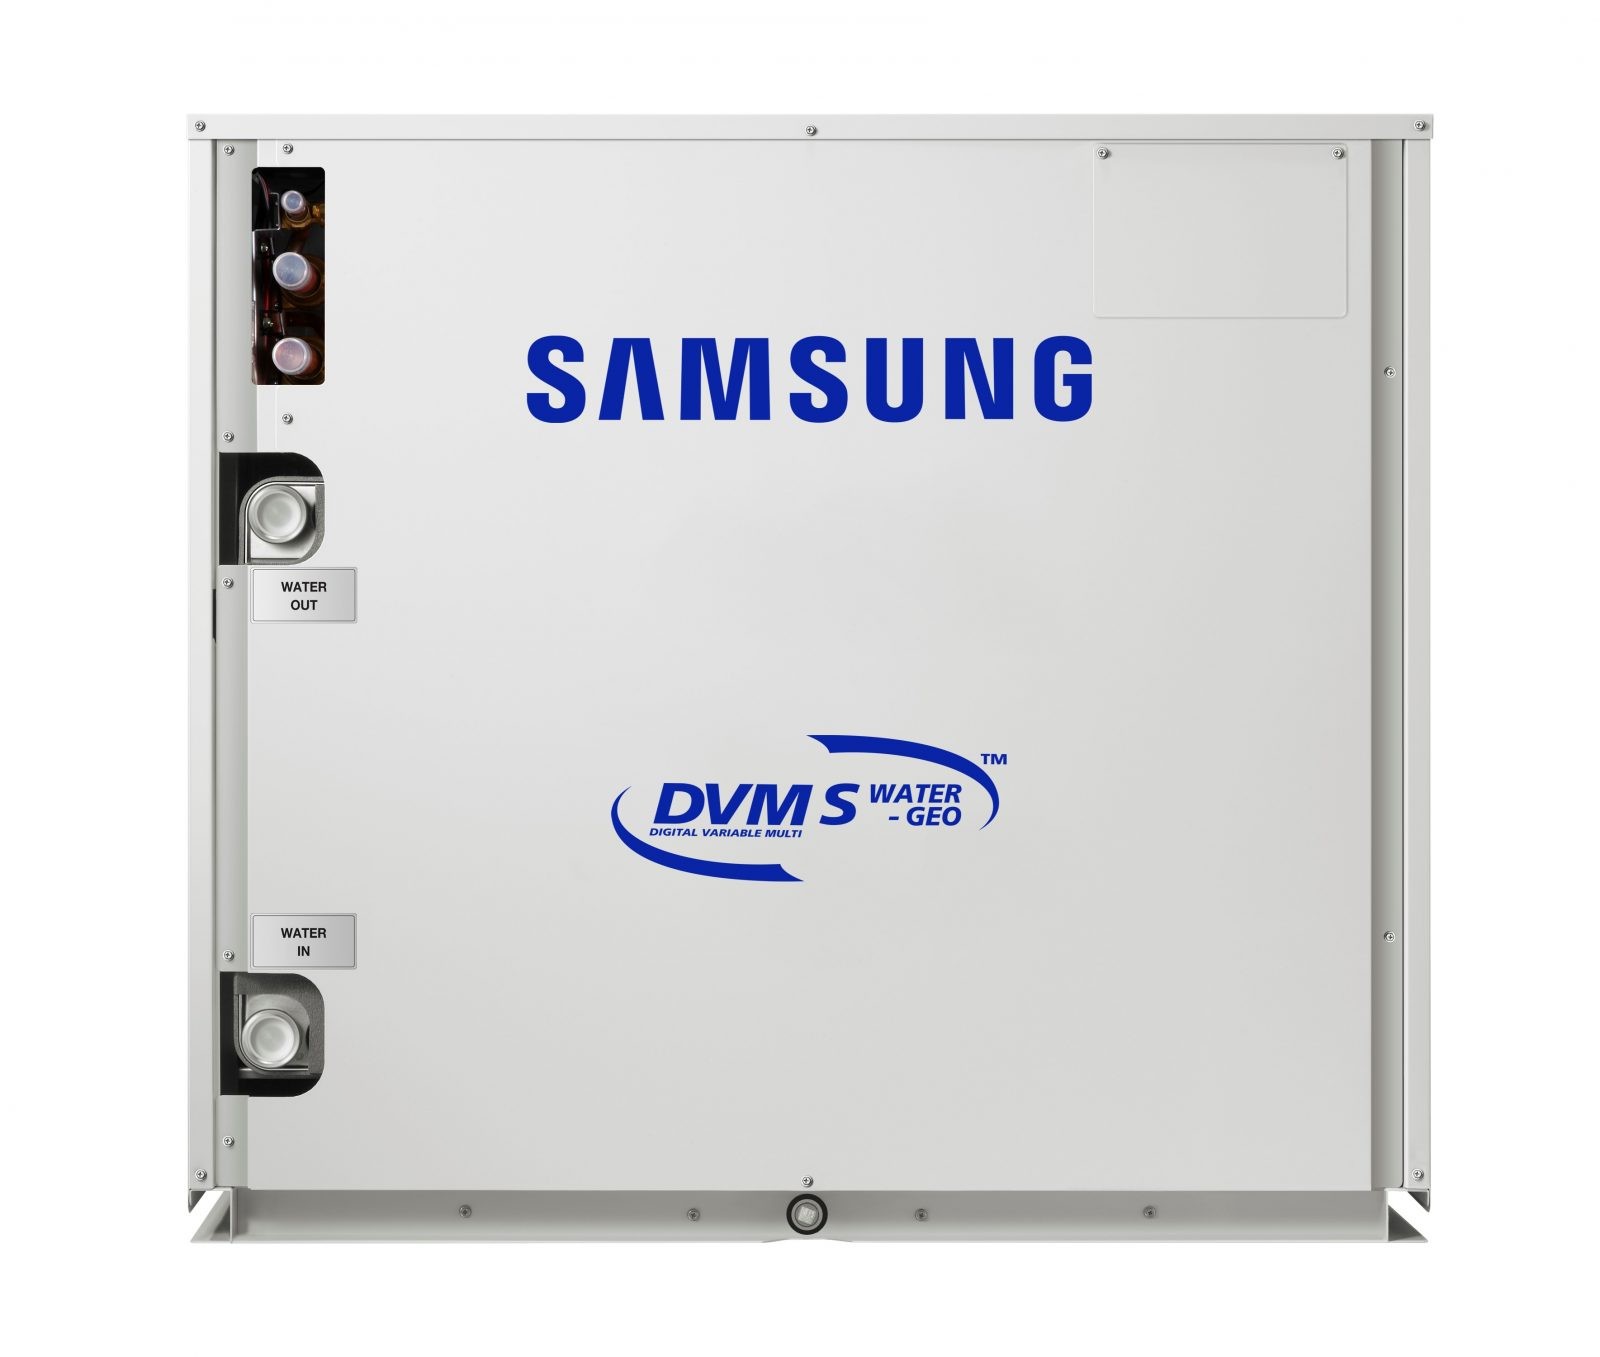 Външно тяло Samsung DVM S Water AM520MXWANR